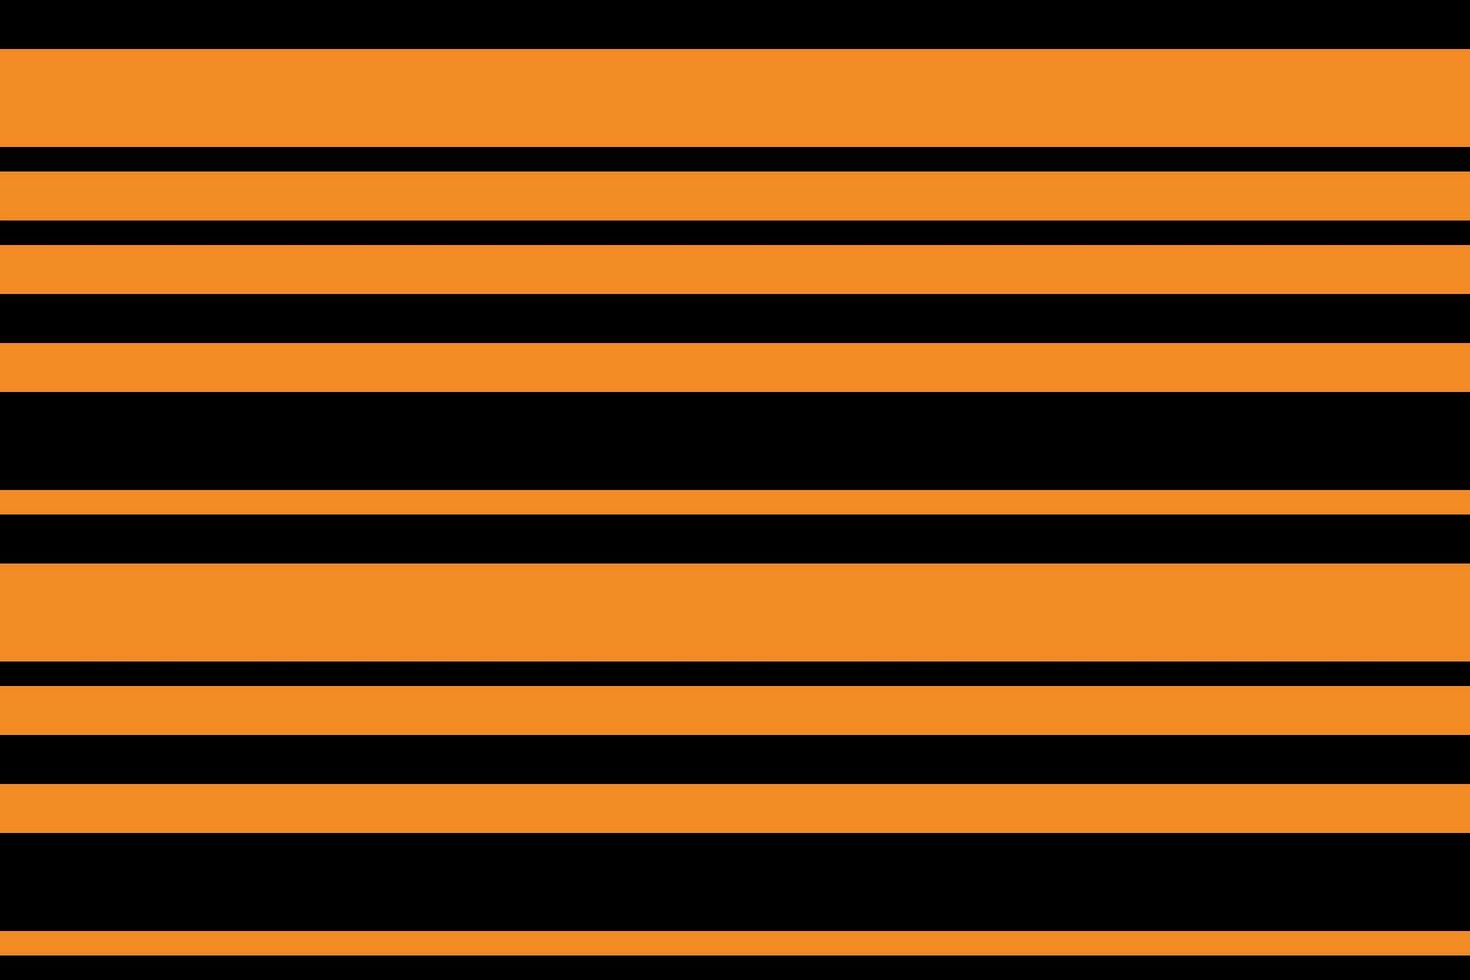 design pattern of black lines and oranges vector